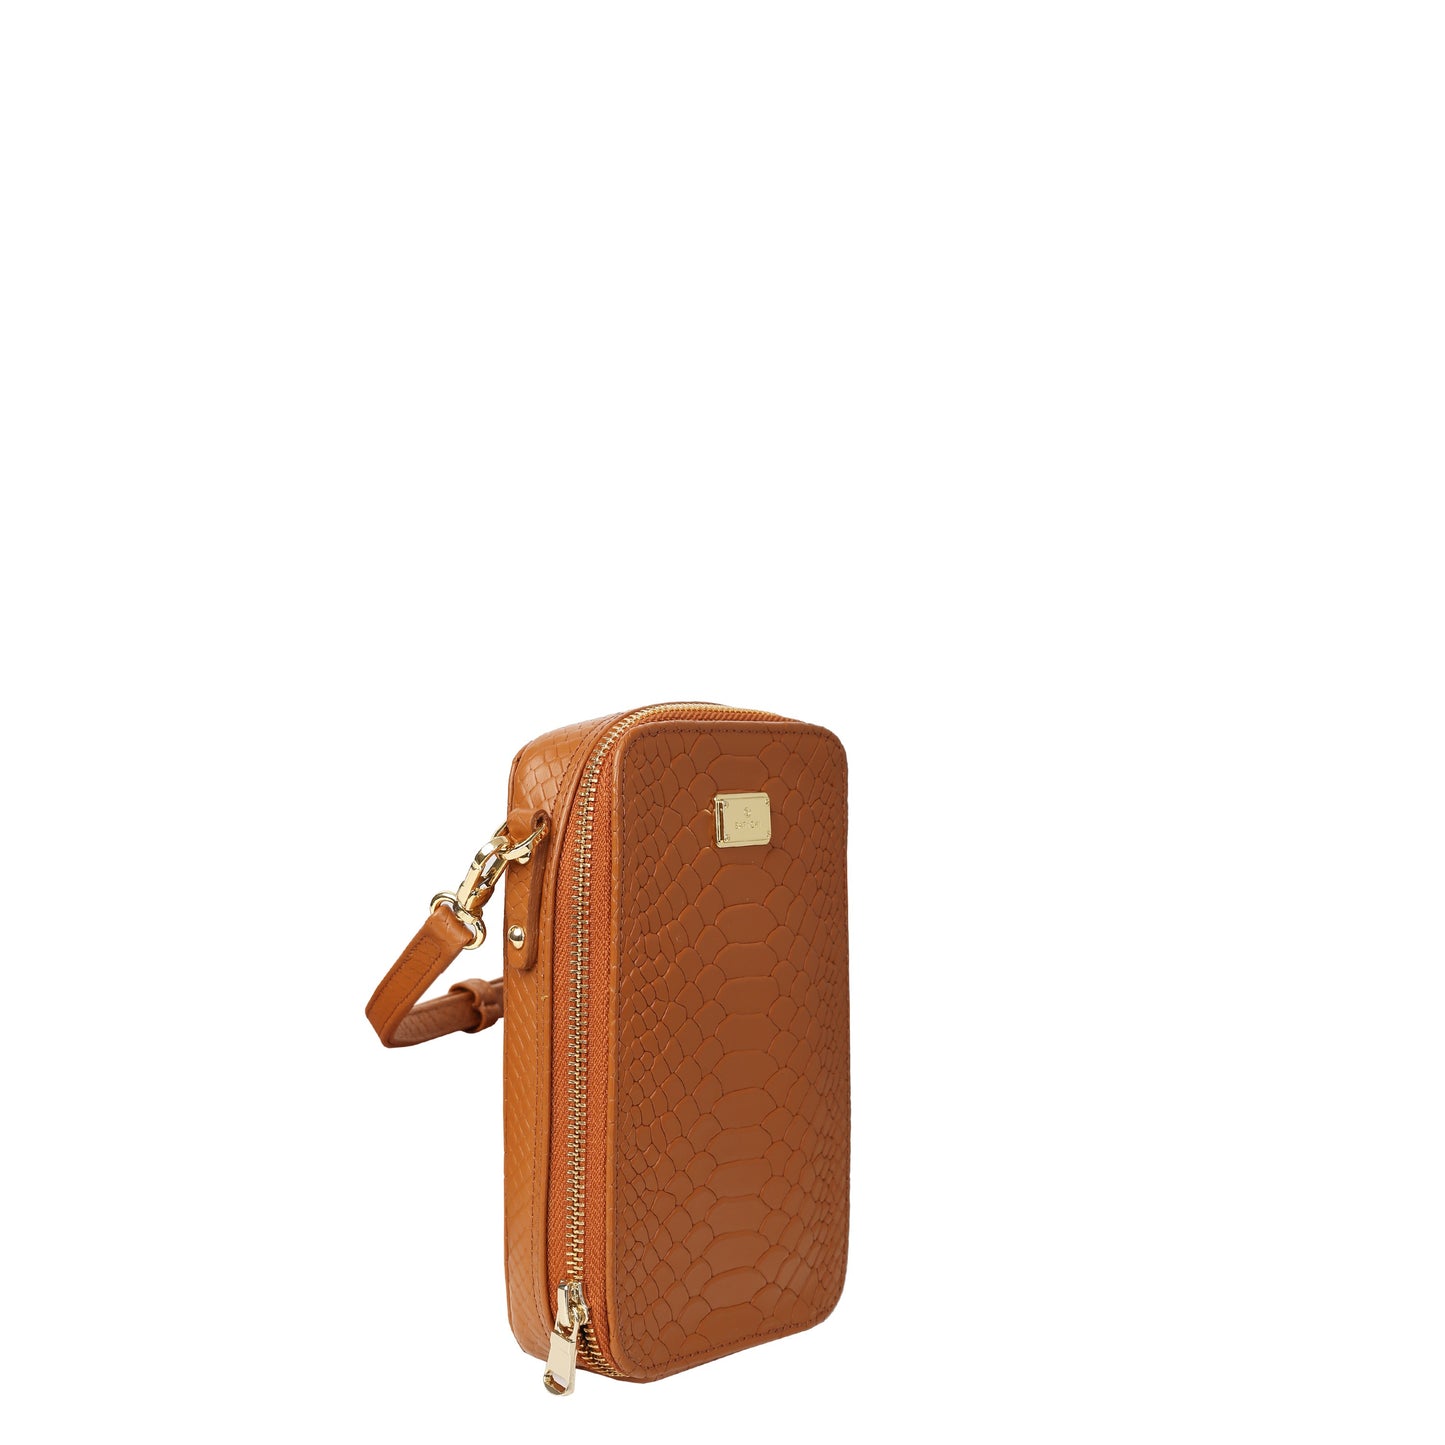 COGNAC leather phone case